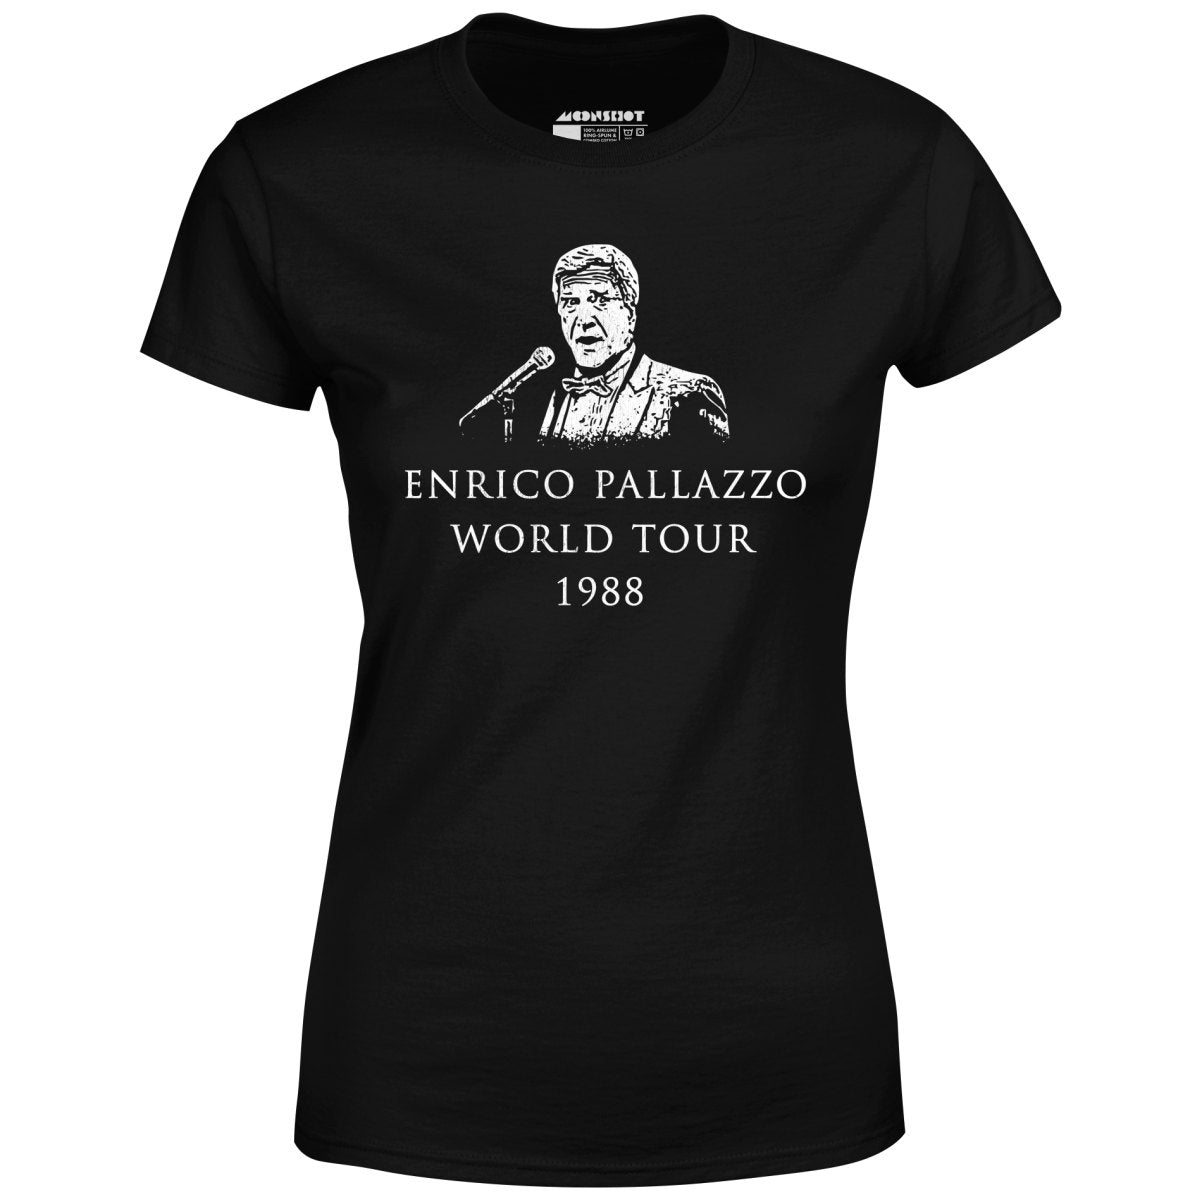 Enrico Pallazzo World Tour - Women's T-Shirt